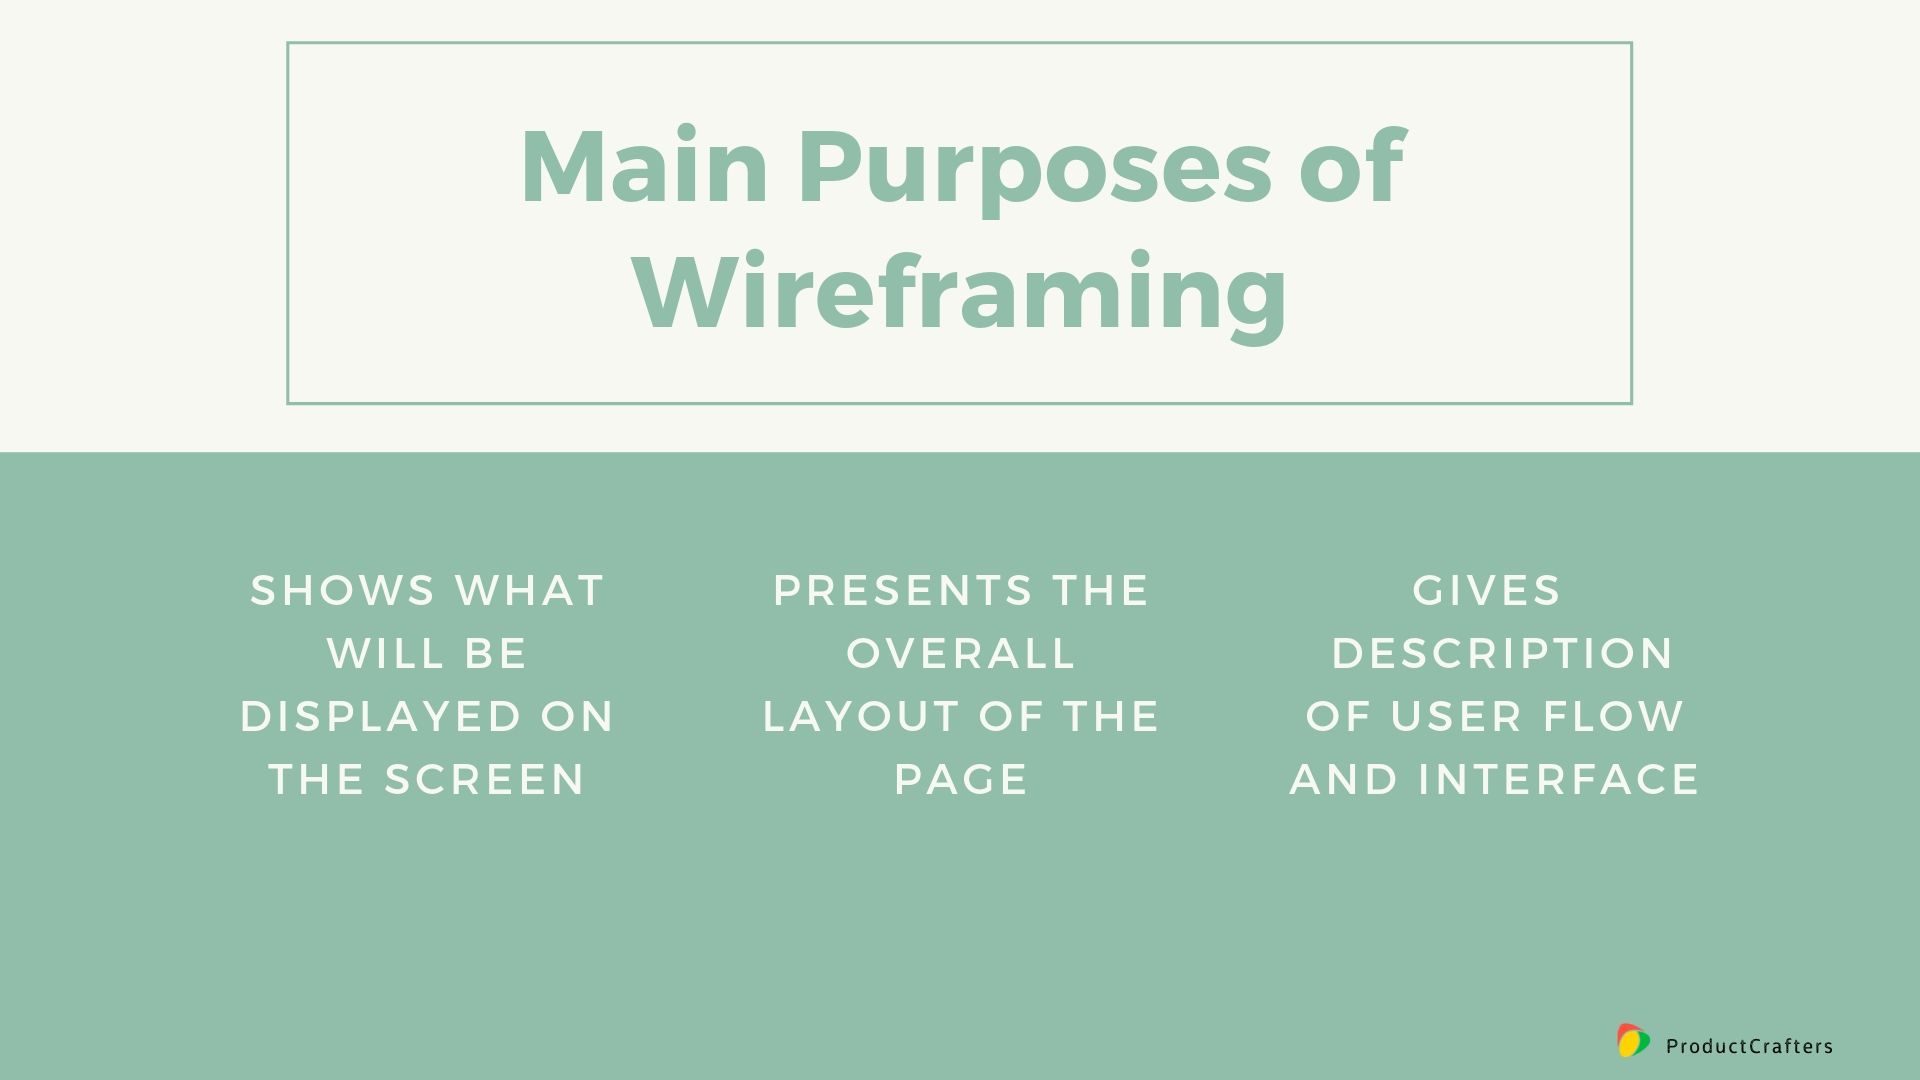 Main Purposes of Wireframing